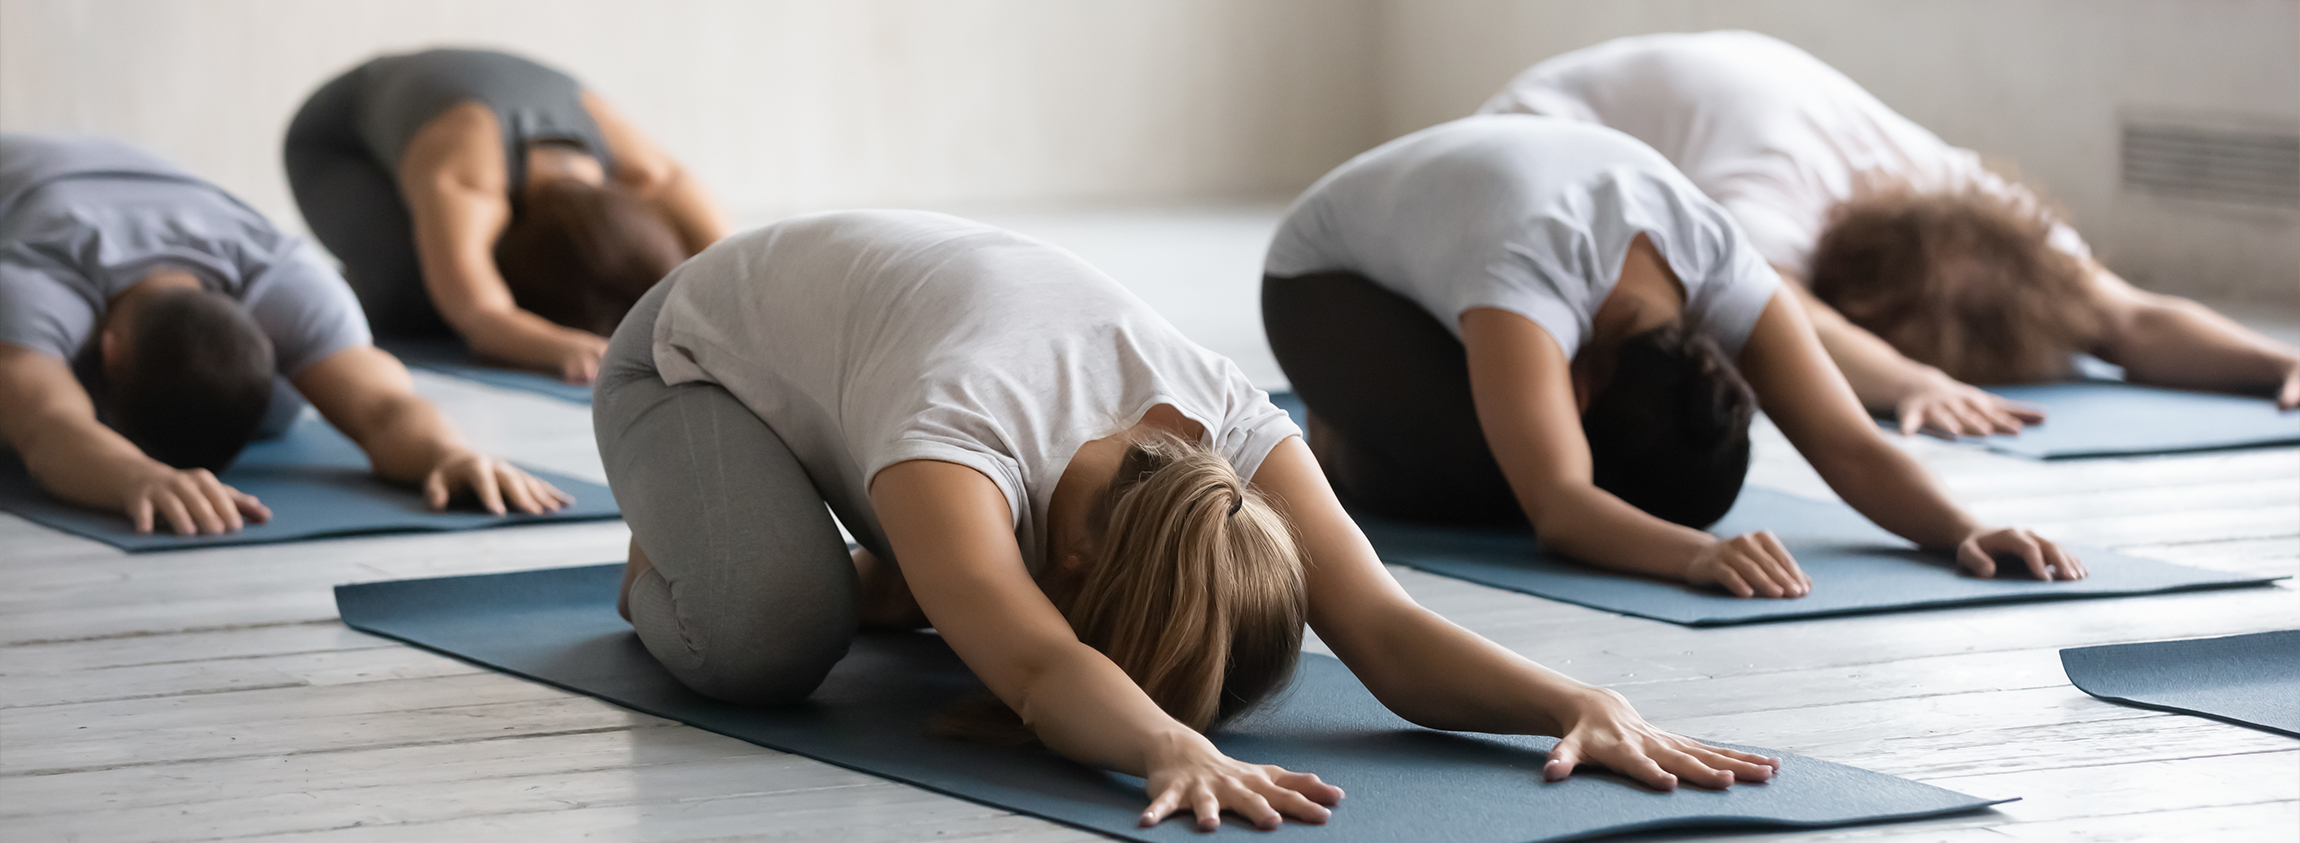 Yoga class synchronised movement